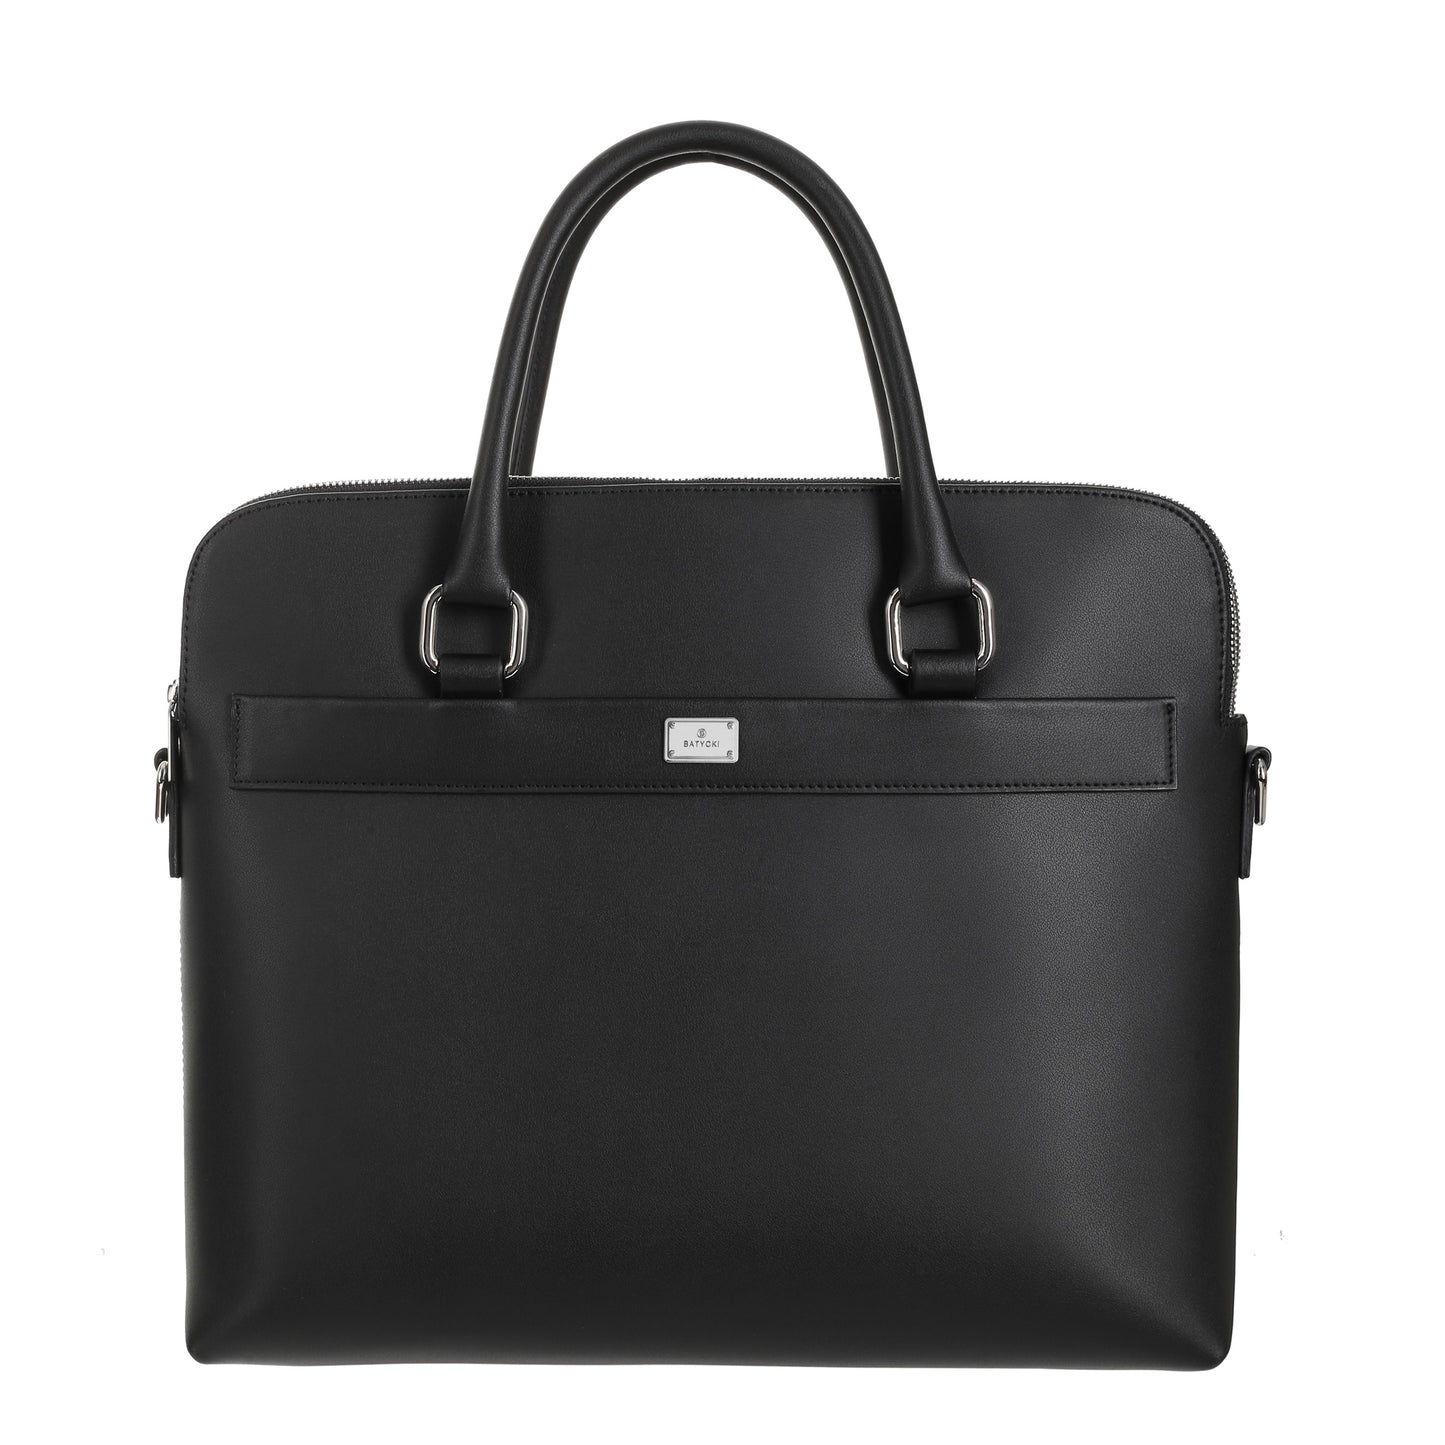 Napa black leather laptop bag